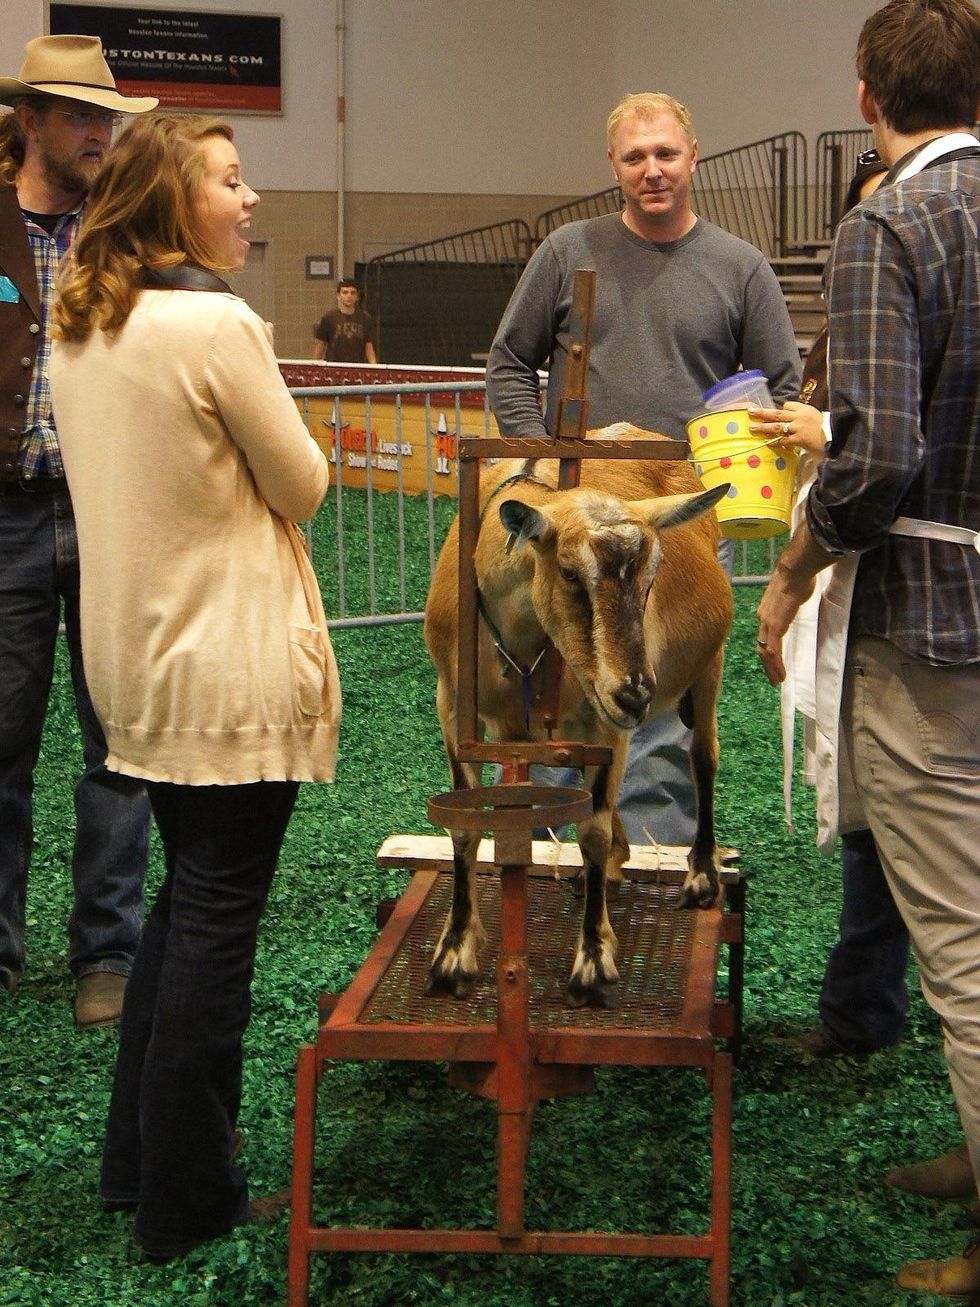 RodeoHouston, goat milking contest, February 2013